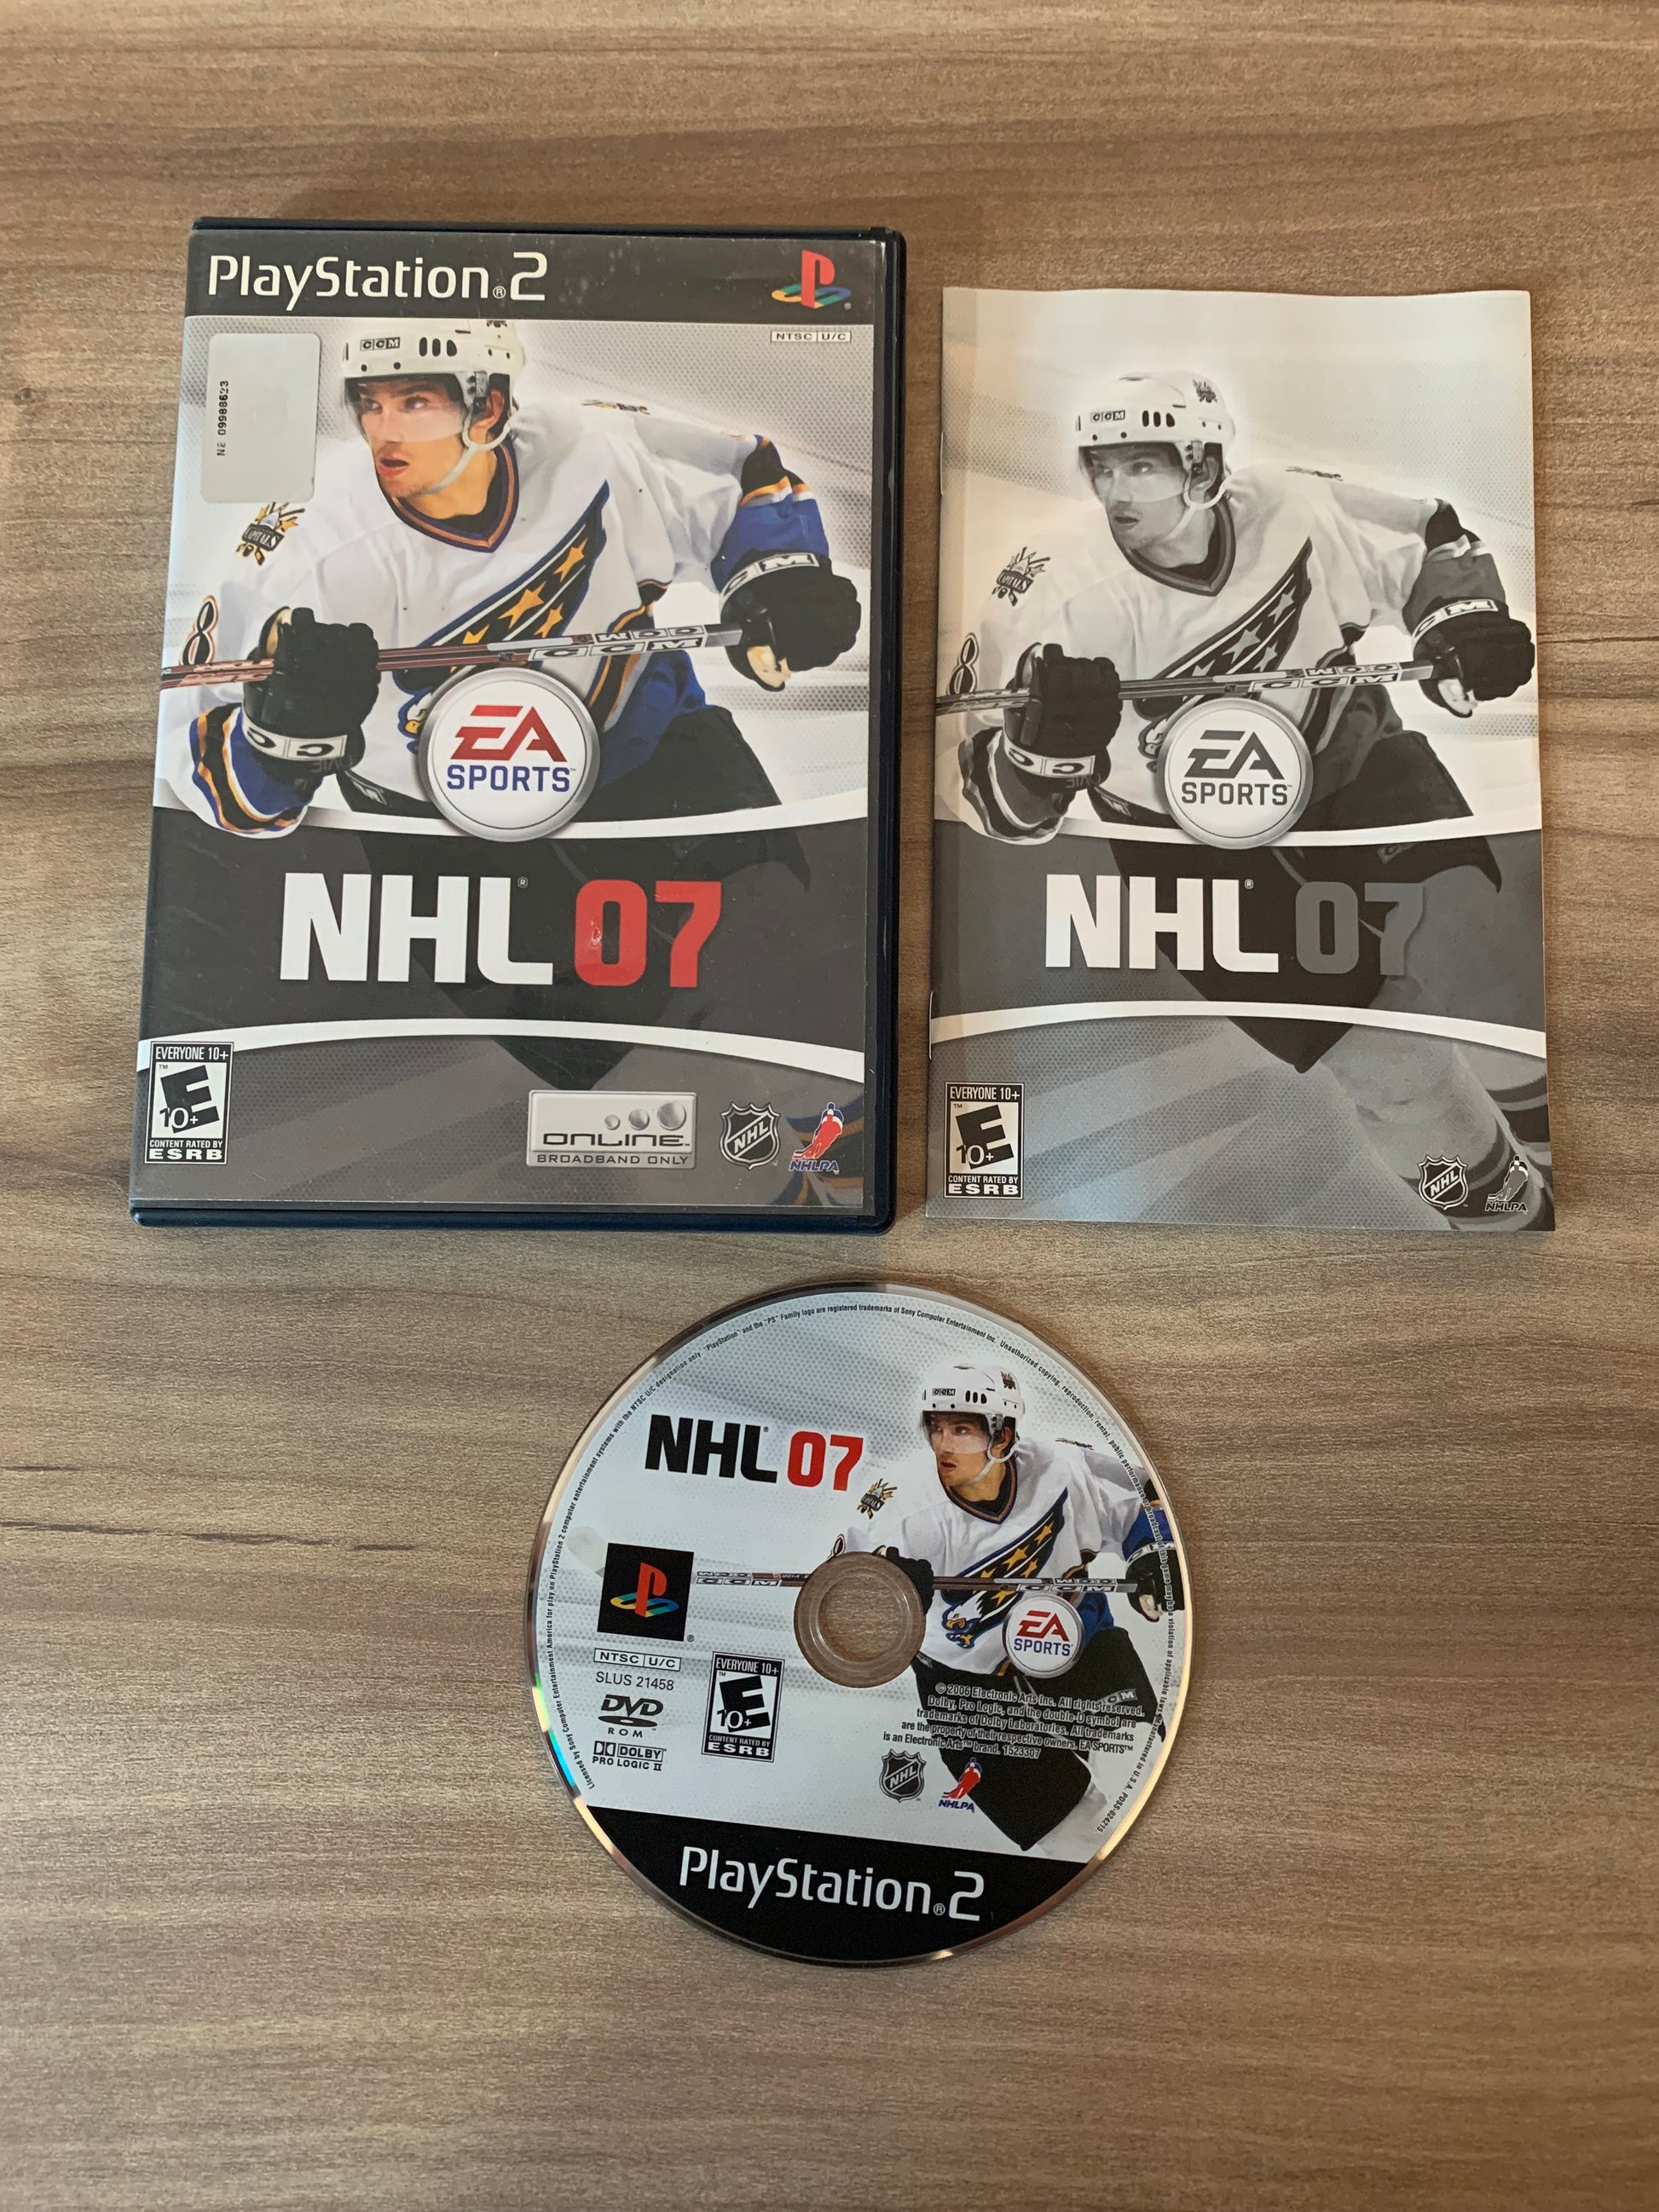 PiXEL-RETRO.COM : SONY PLAYSTATION 2 (PS2) COMPLET CIB BOX MANUAL GAME NTSC NHL 07